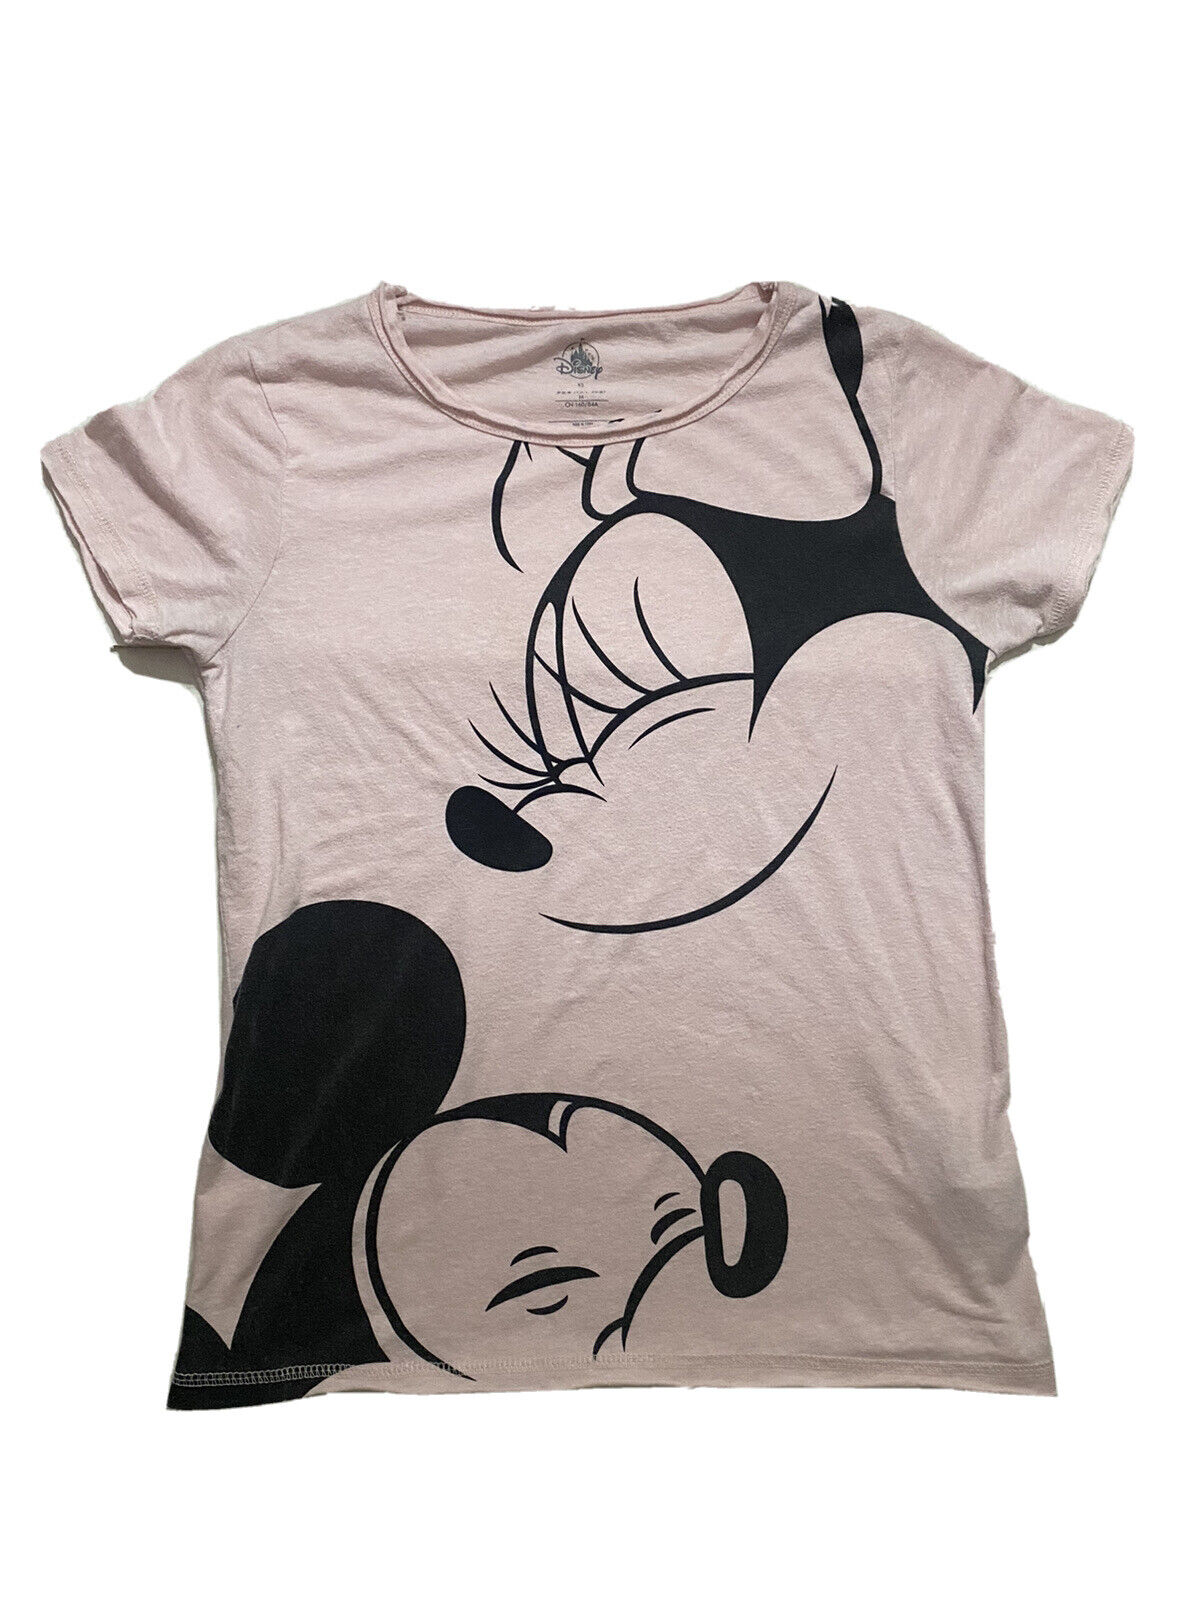 Disney Store London Pink Minnie & Mickey Mouse T-Shirt Sz XS Short Sleeve Thin